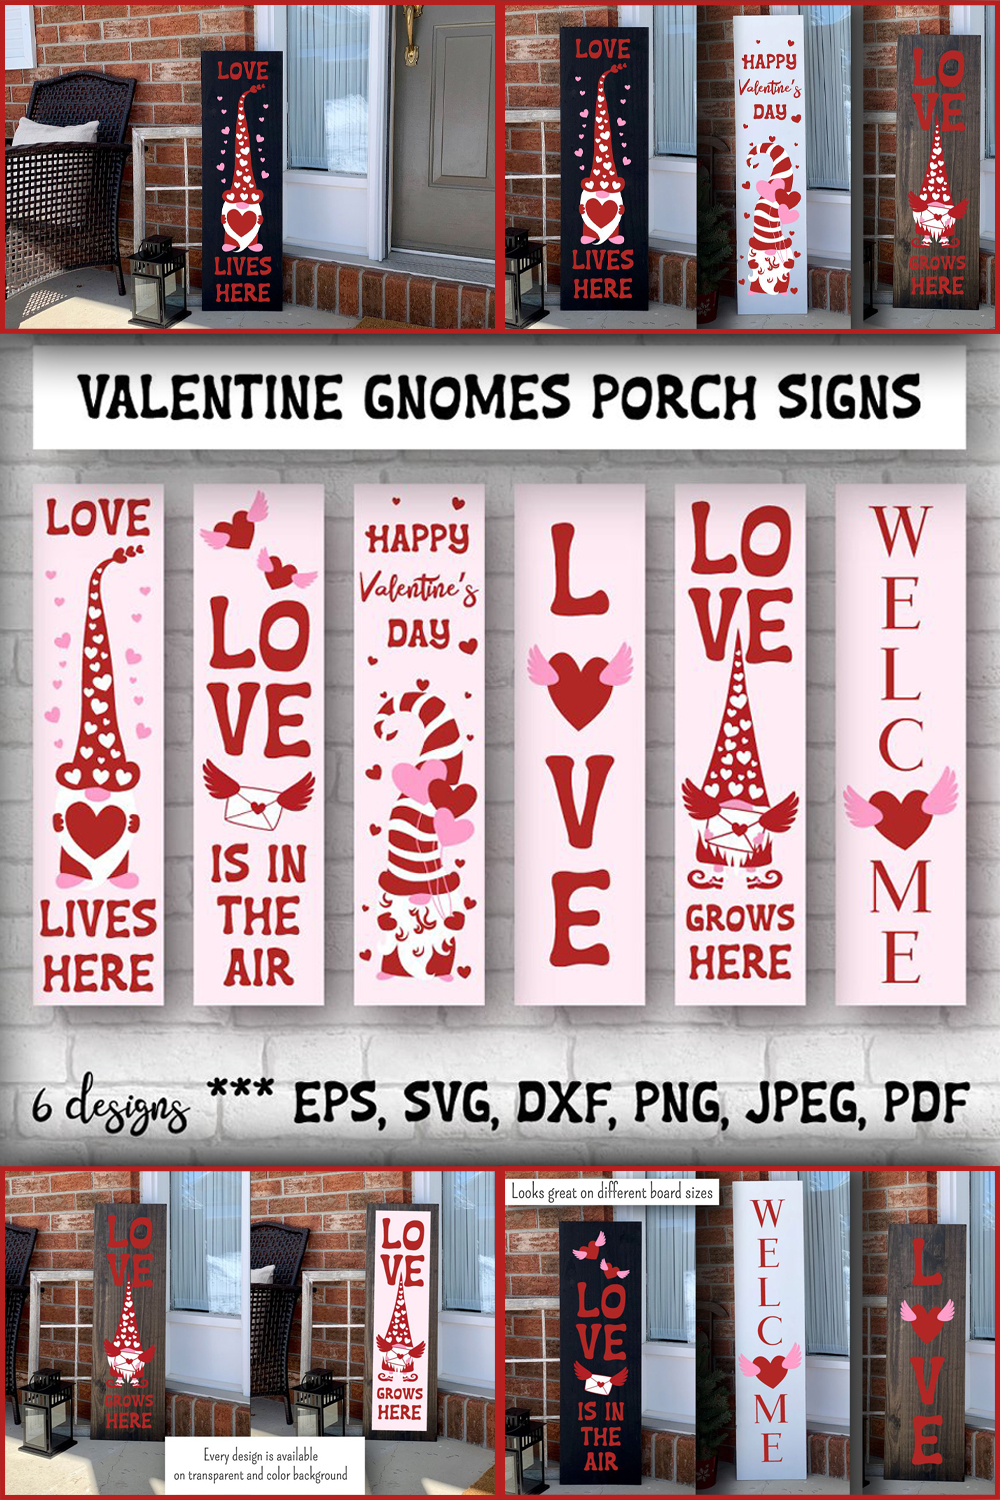 Valentine gnomes porch signs of pinterest.